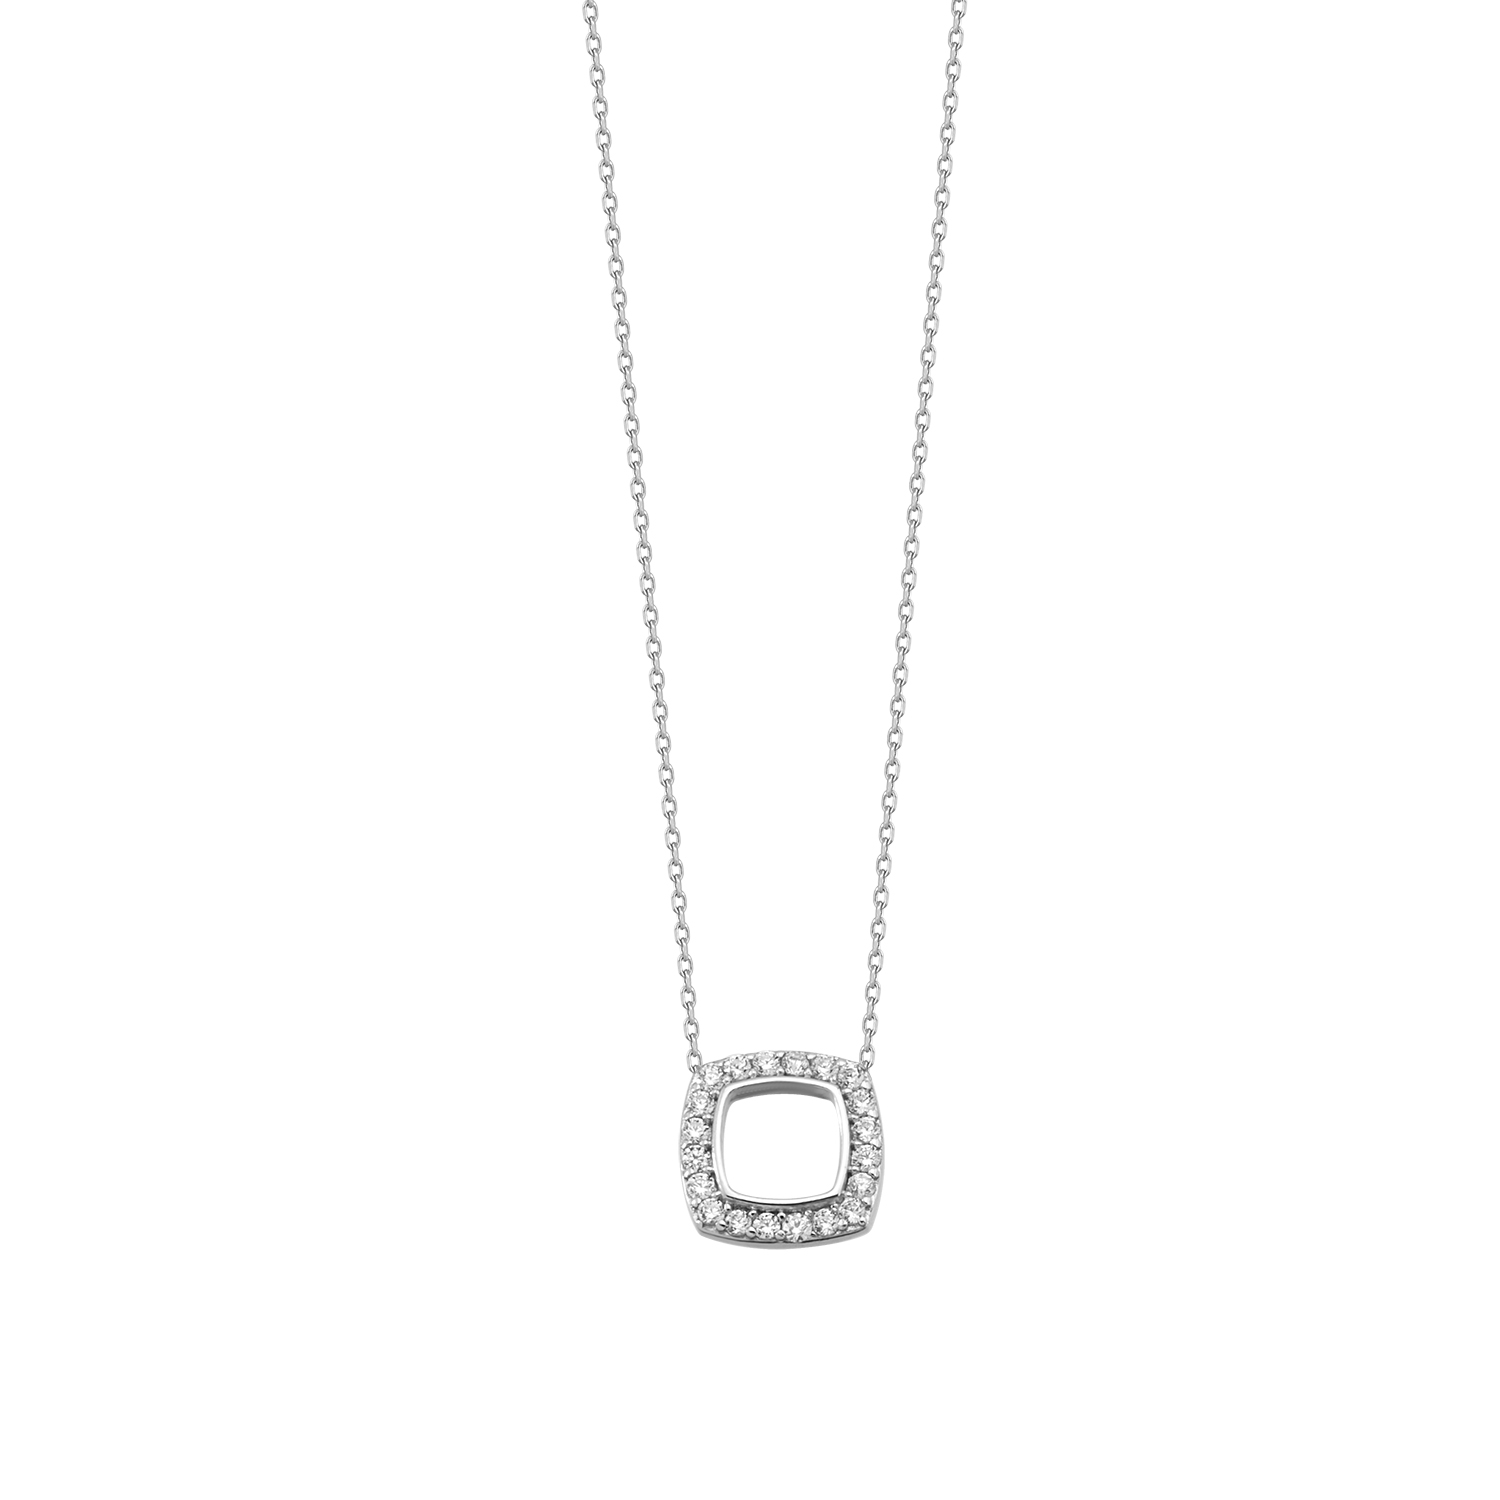 Silver Necklace Minimal Design 925 Sterling